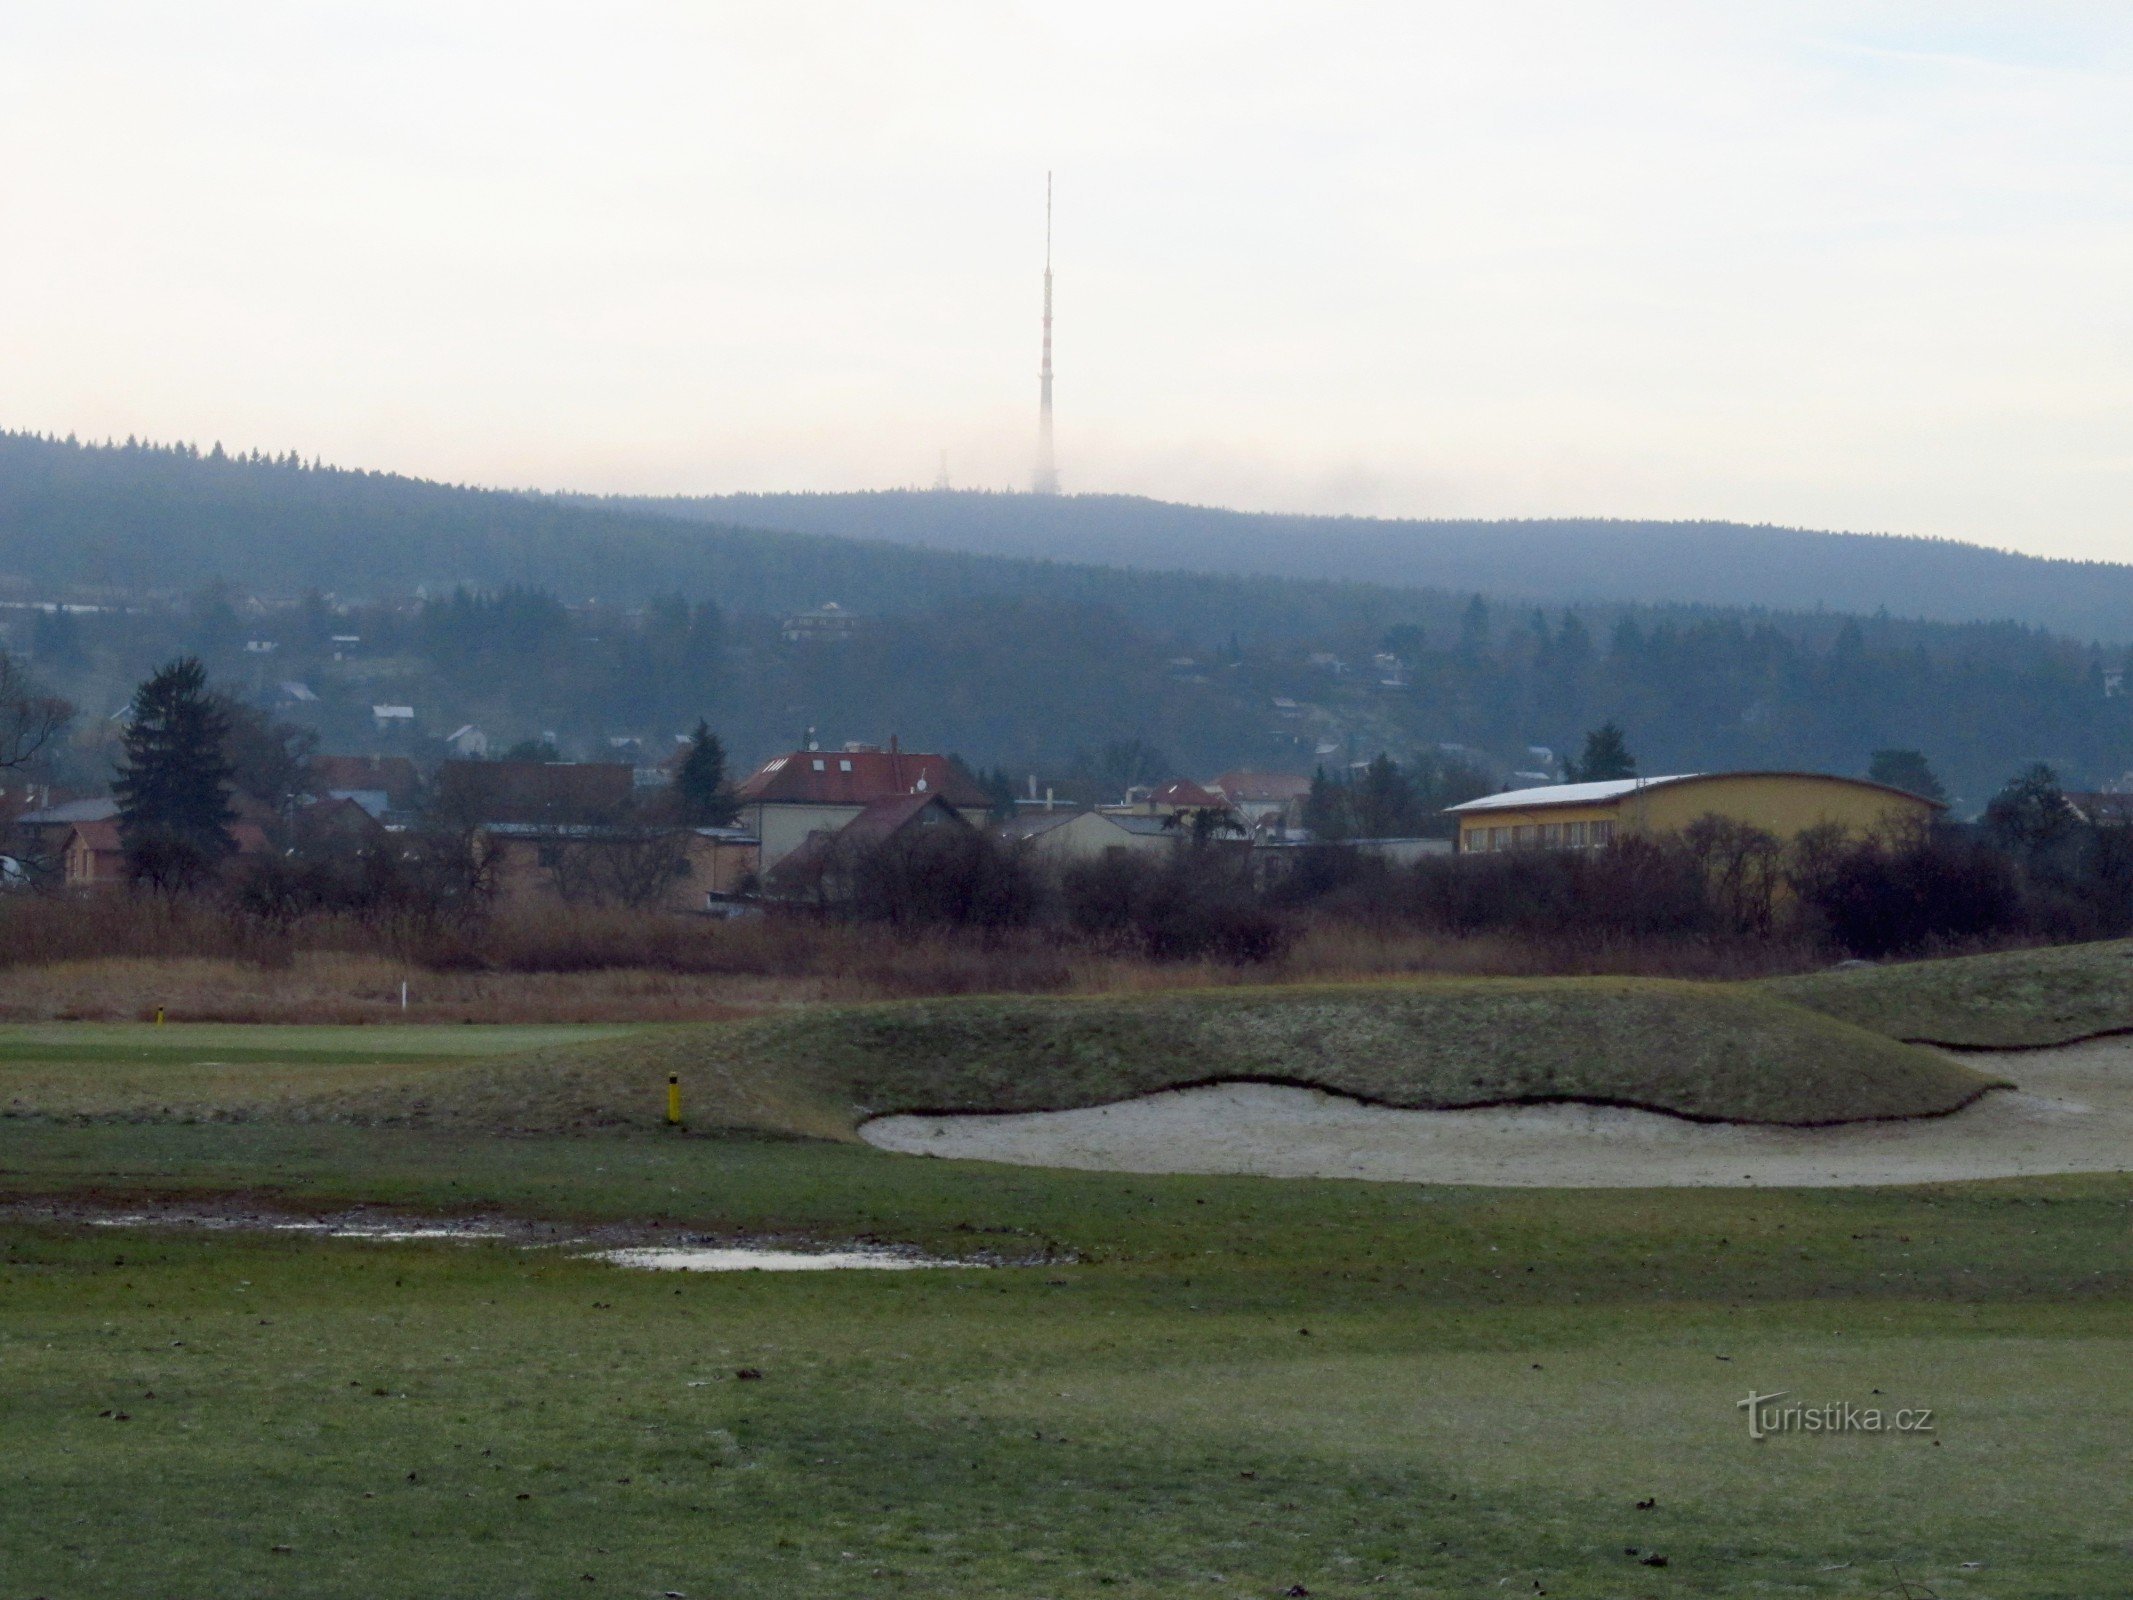 02 Golf teren Peluňka, Cukrák u pozadini